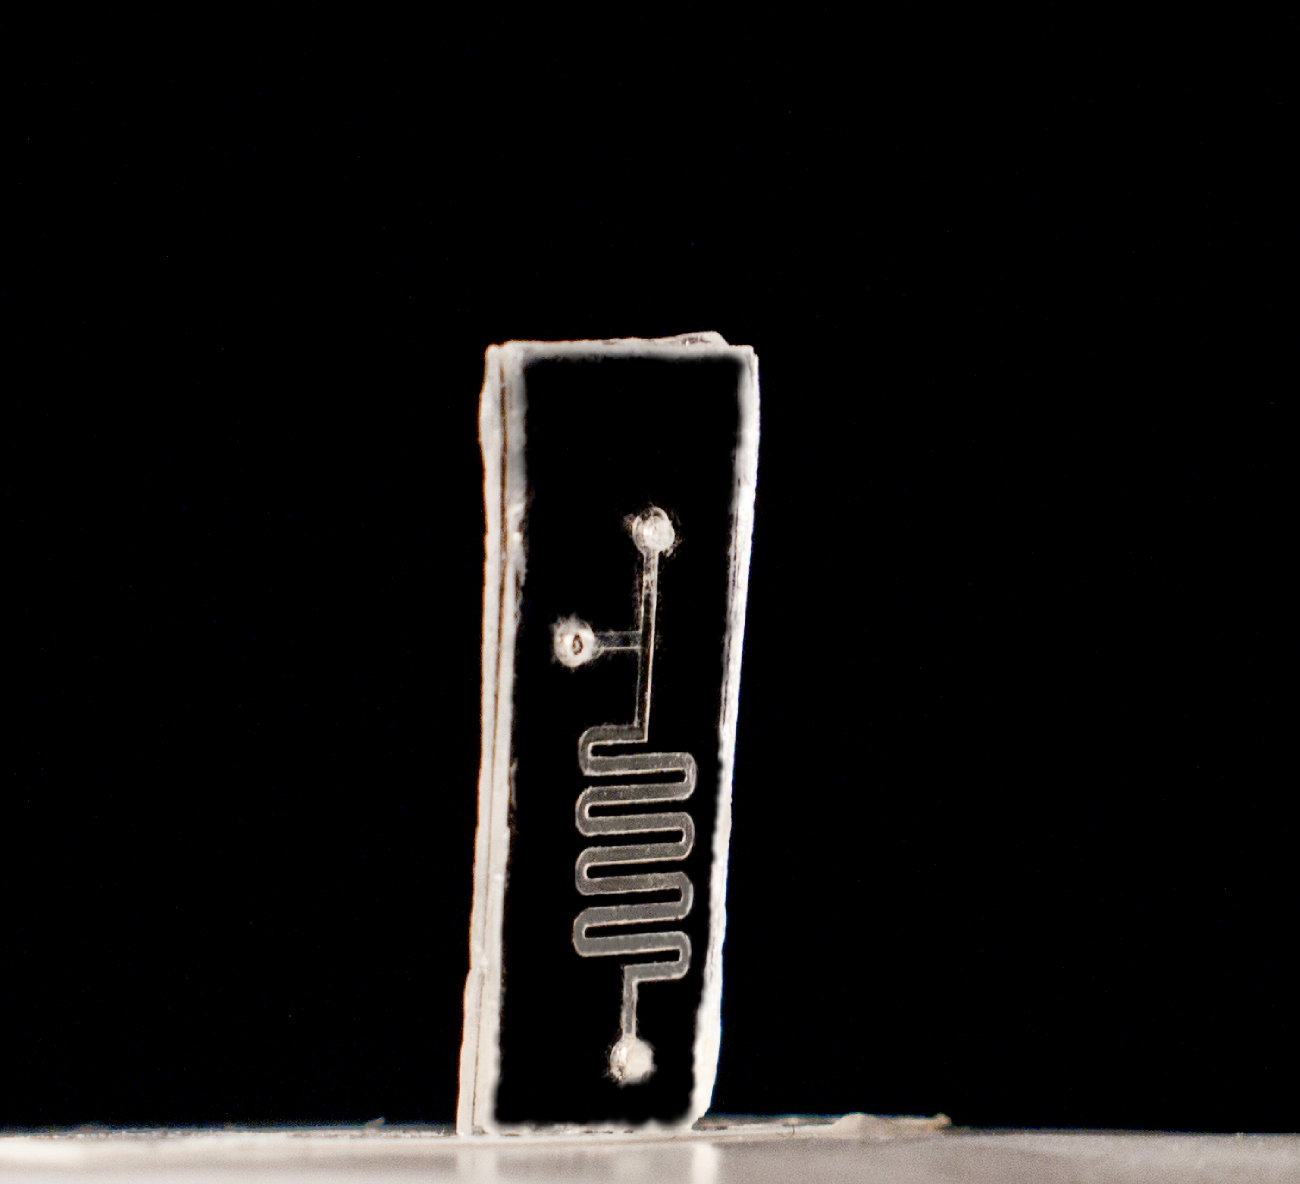 Glass microfluidic chip